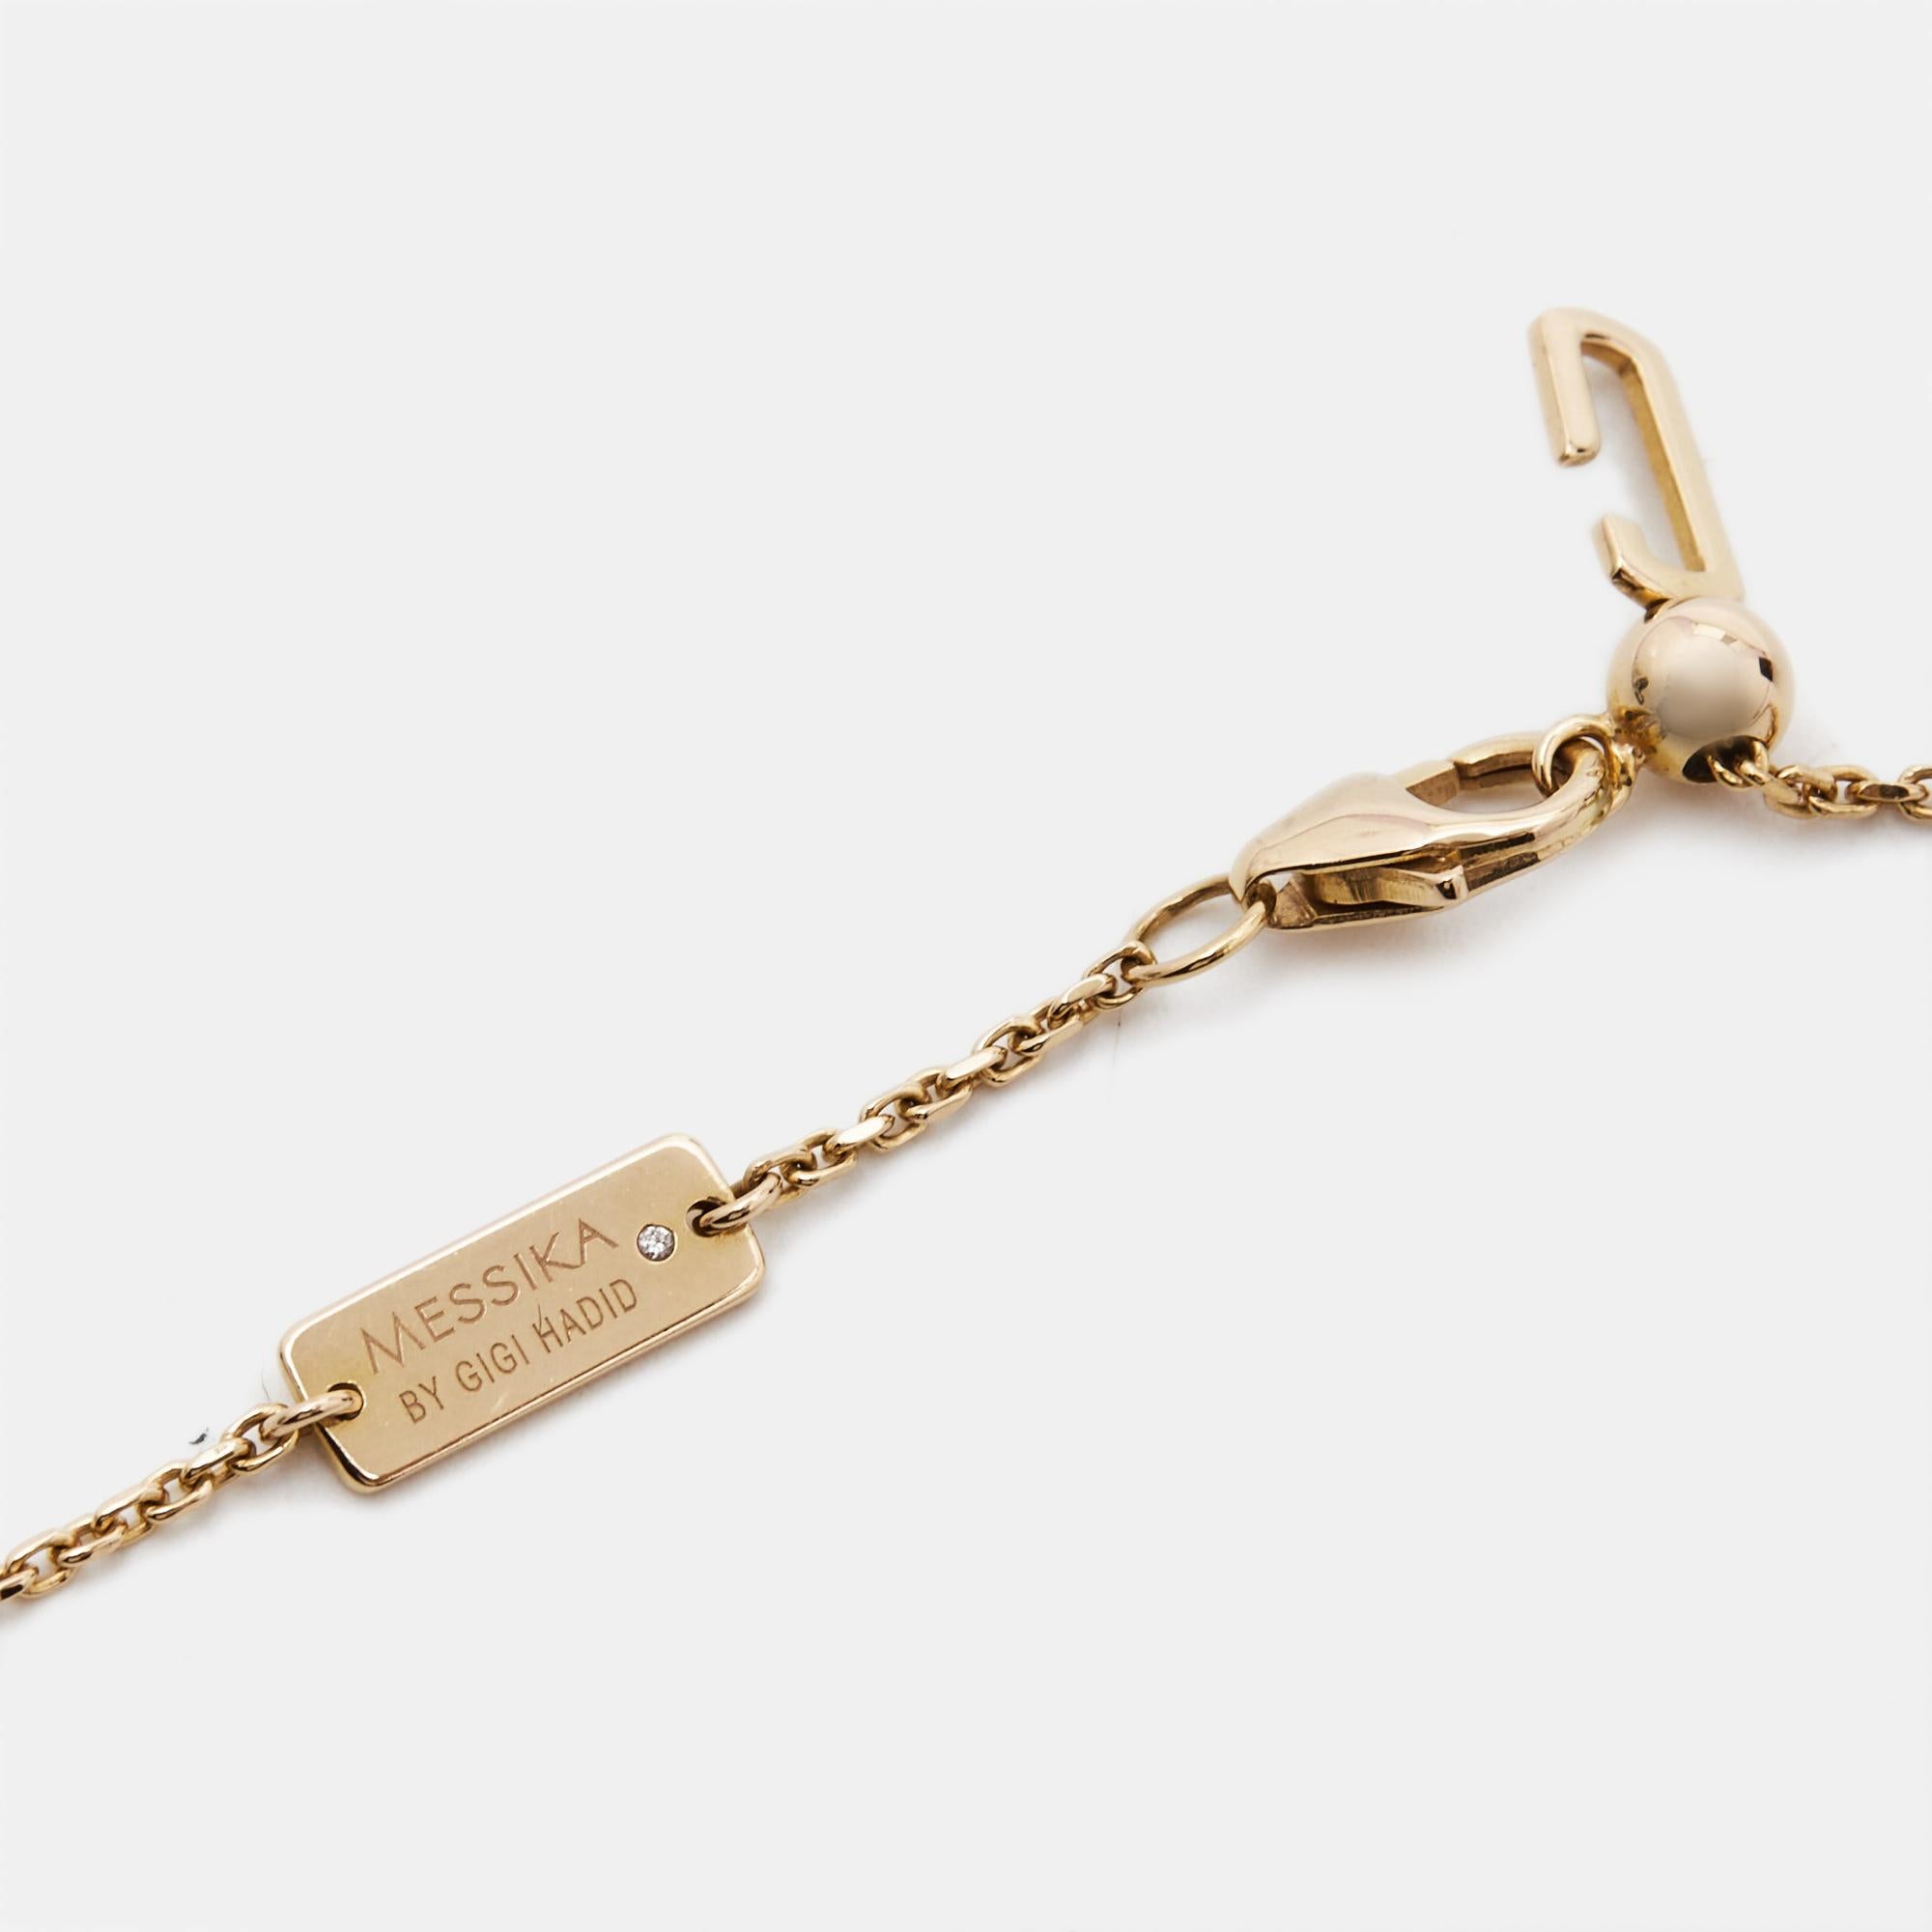 Messika Gigi Hadid Move Addiction Diamond 18k Rose Gold Necklace In Good Condition For Sale In Dubai, Al Qouz 2